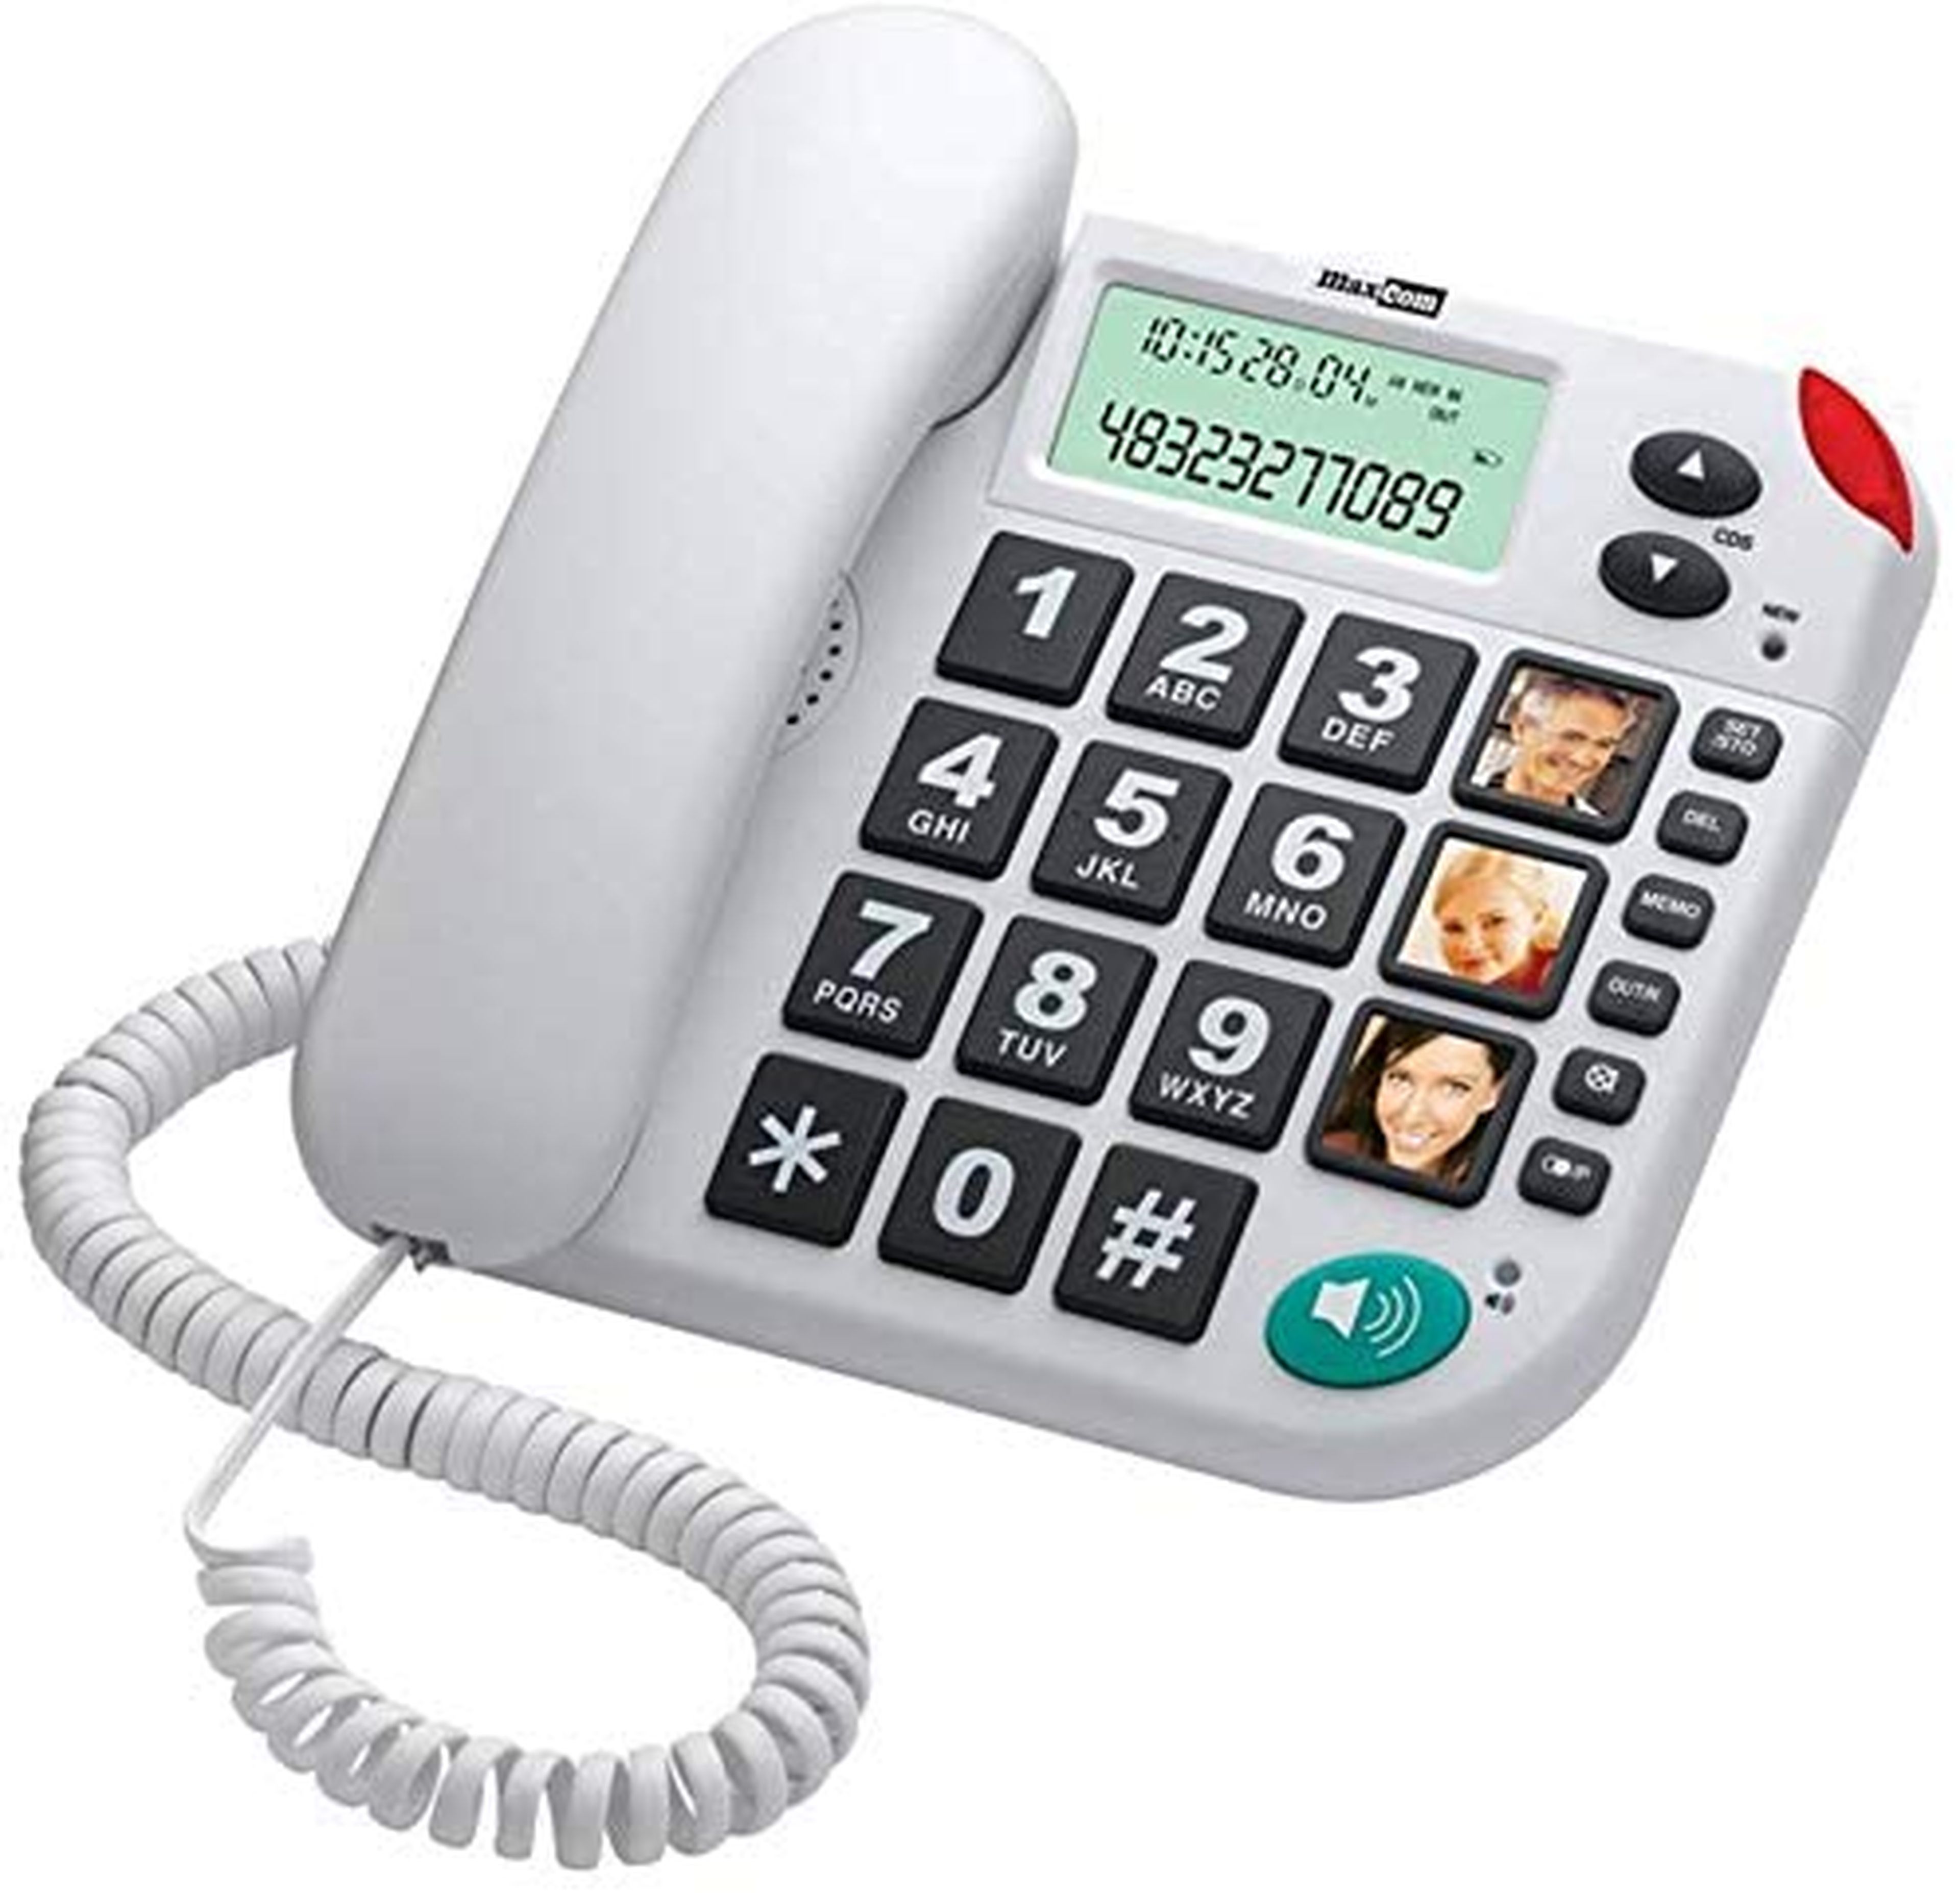 Teléfono fijo para personas mayores con imagen, marcación de un solo toque,  teléfono para ancianos con demencia, volumen de teléfono de 80 dB para